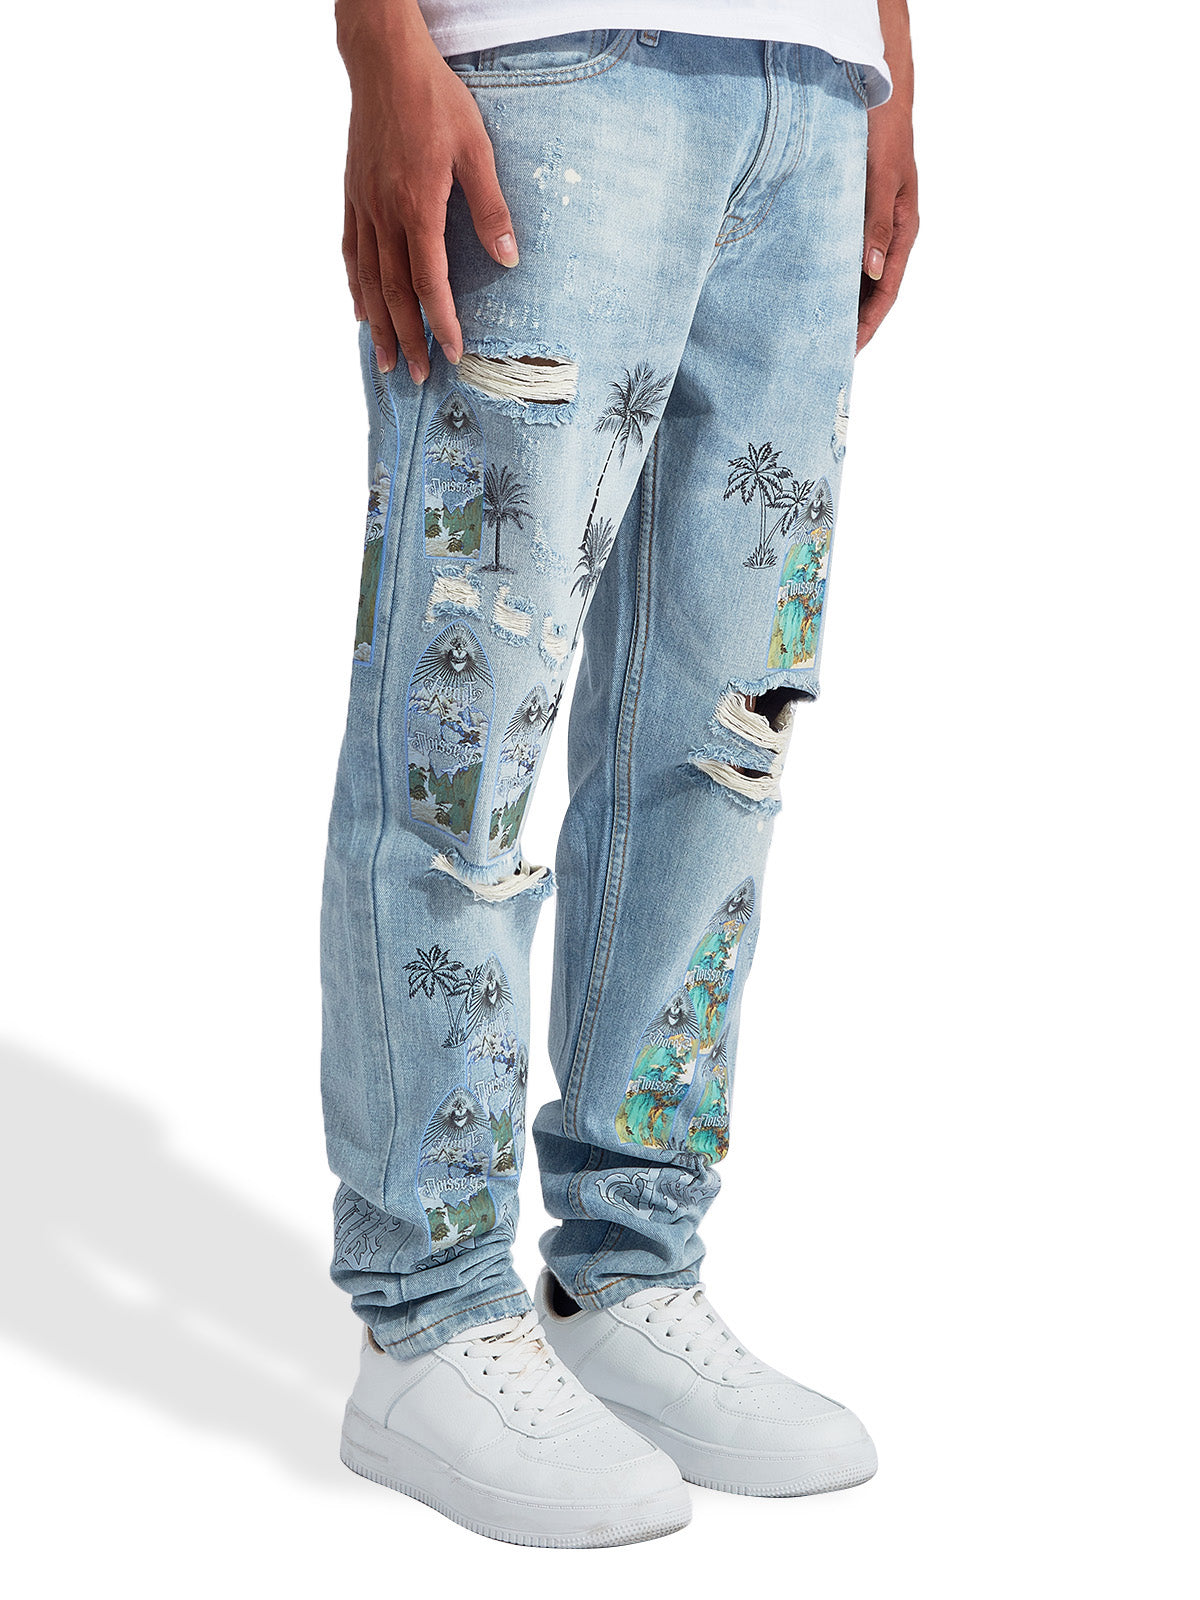 OBSTACLES &amp; DANGERS© Zerrissene Jeans mit Buntglas-Print